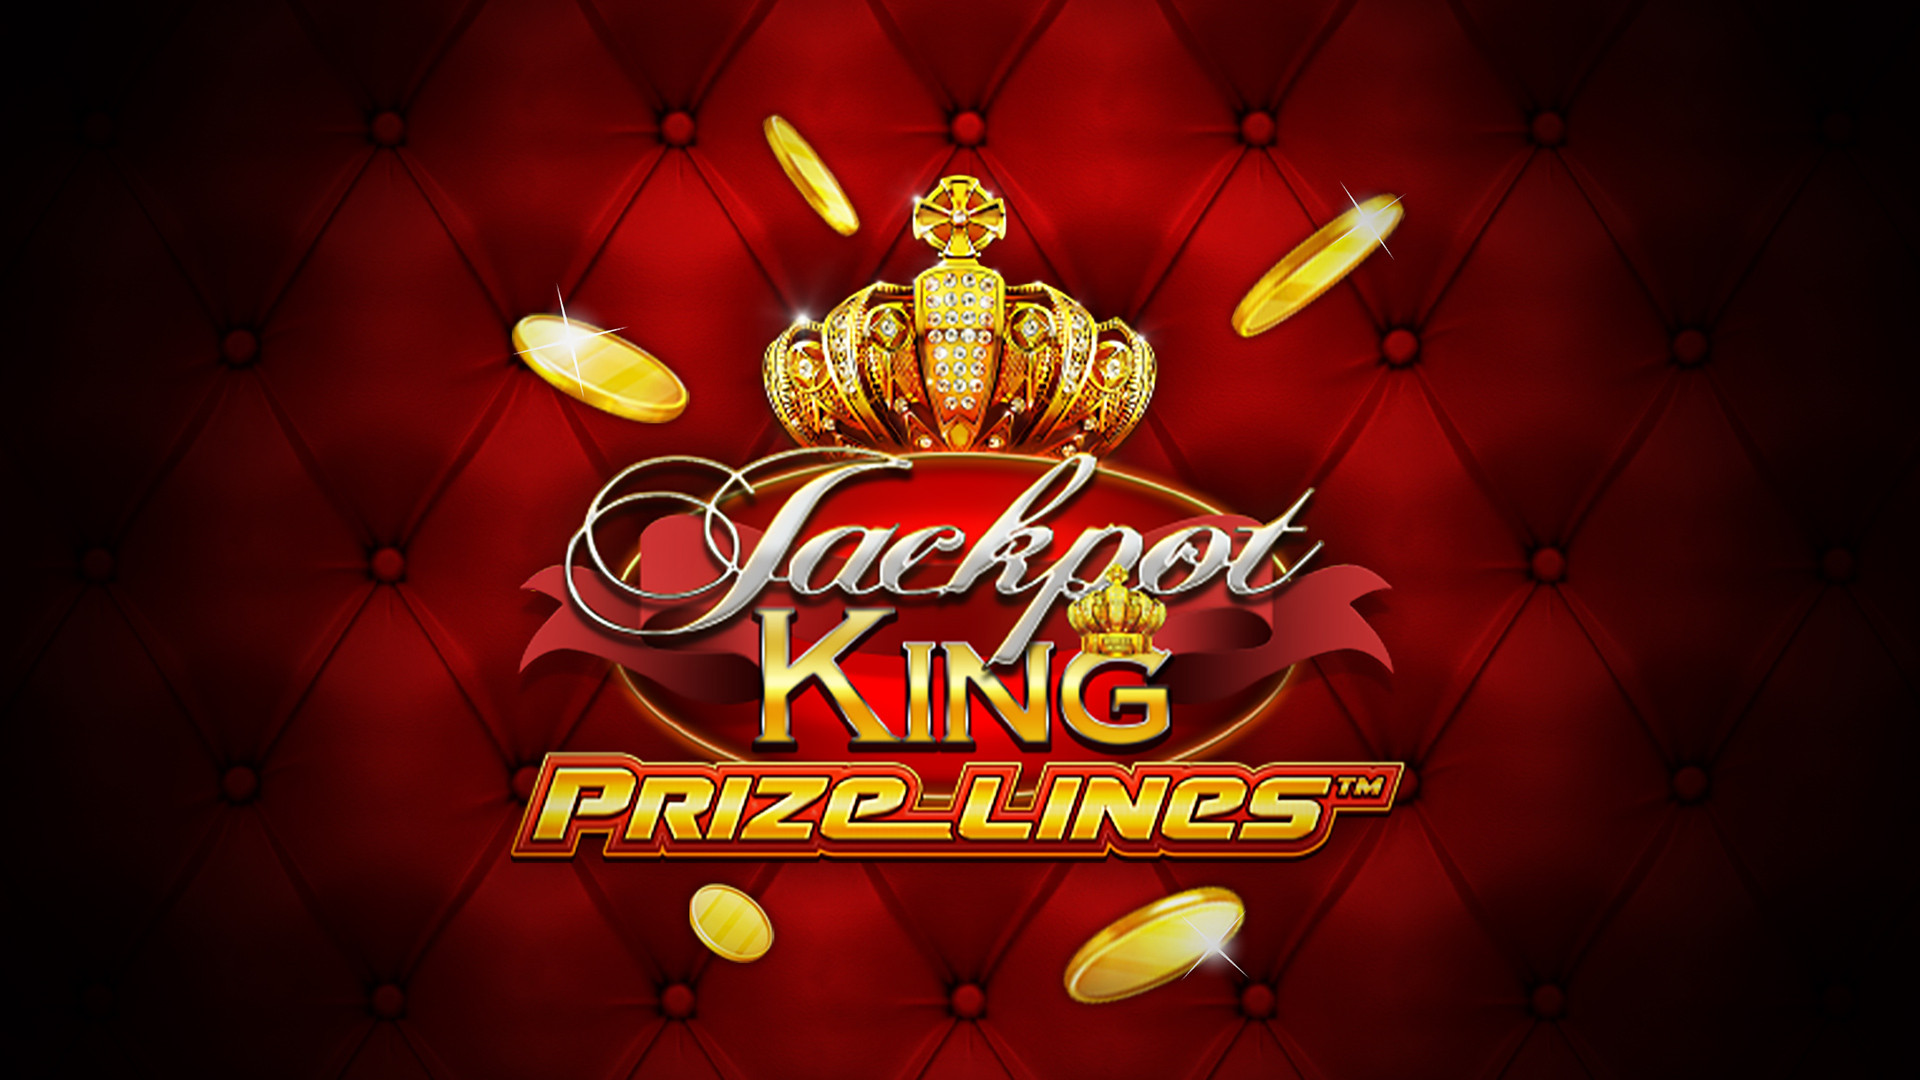 Jackpot King Prize Lines